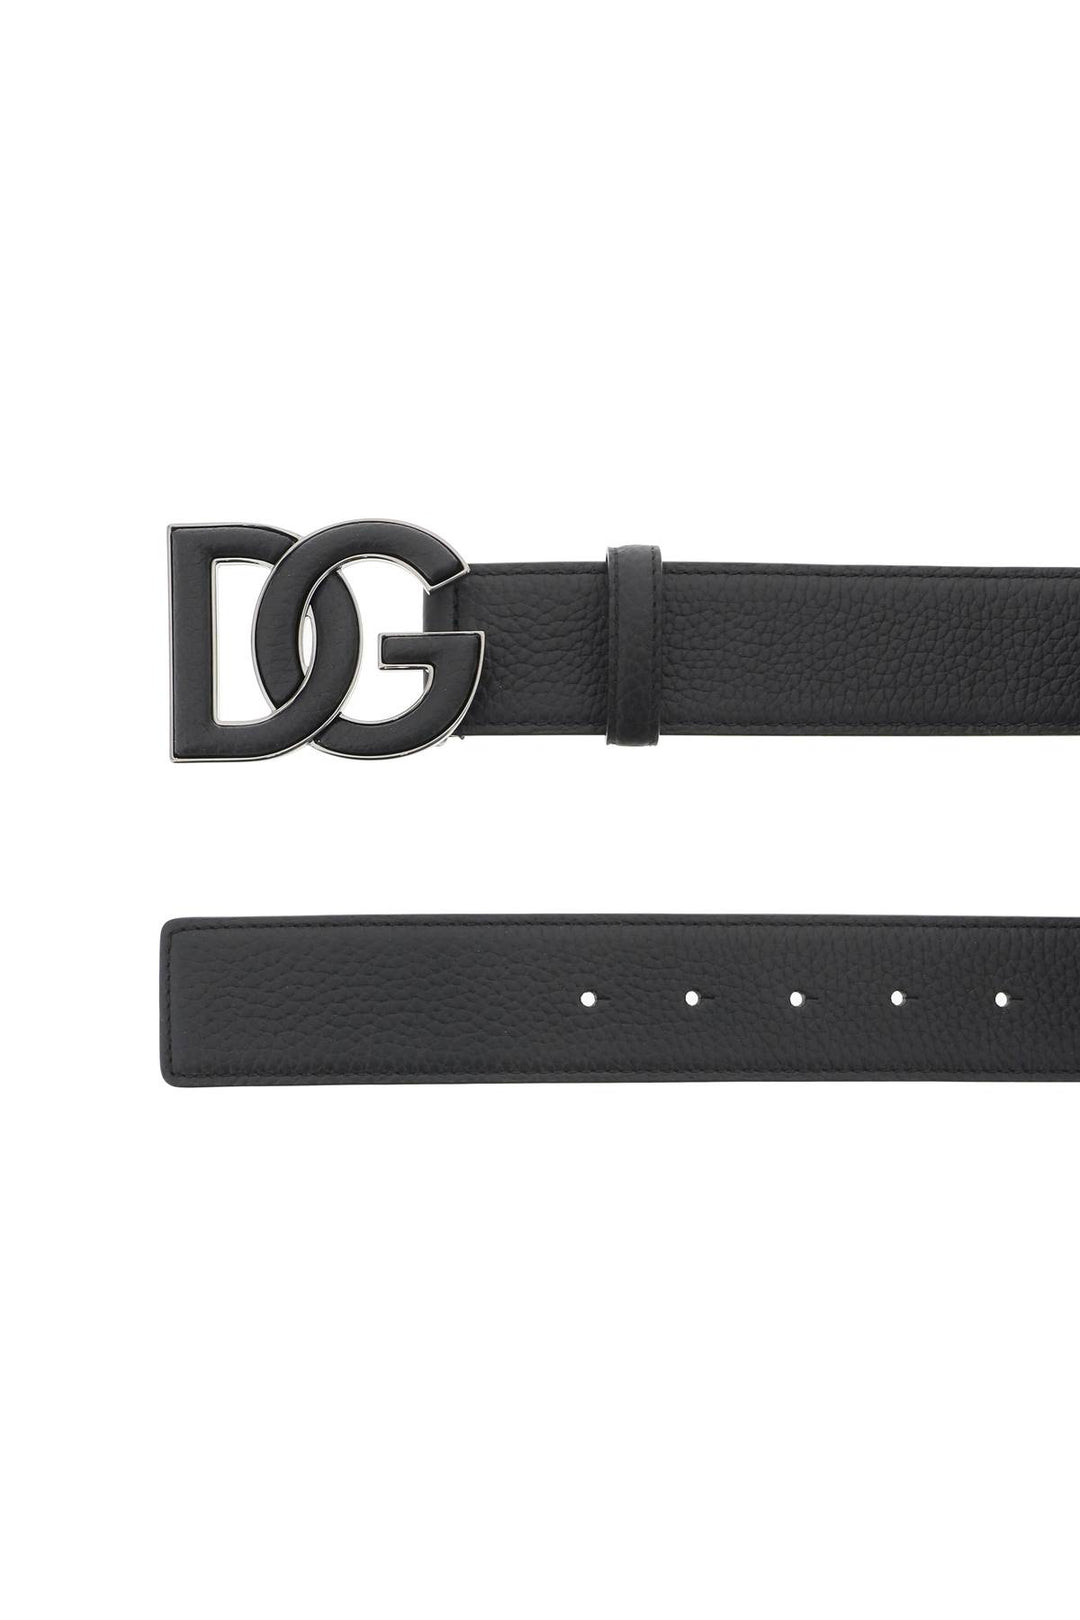 Dolce & Gabbana Leather Belt With Dg Logo Buckle   Black